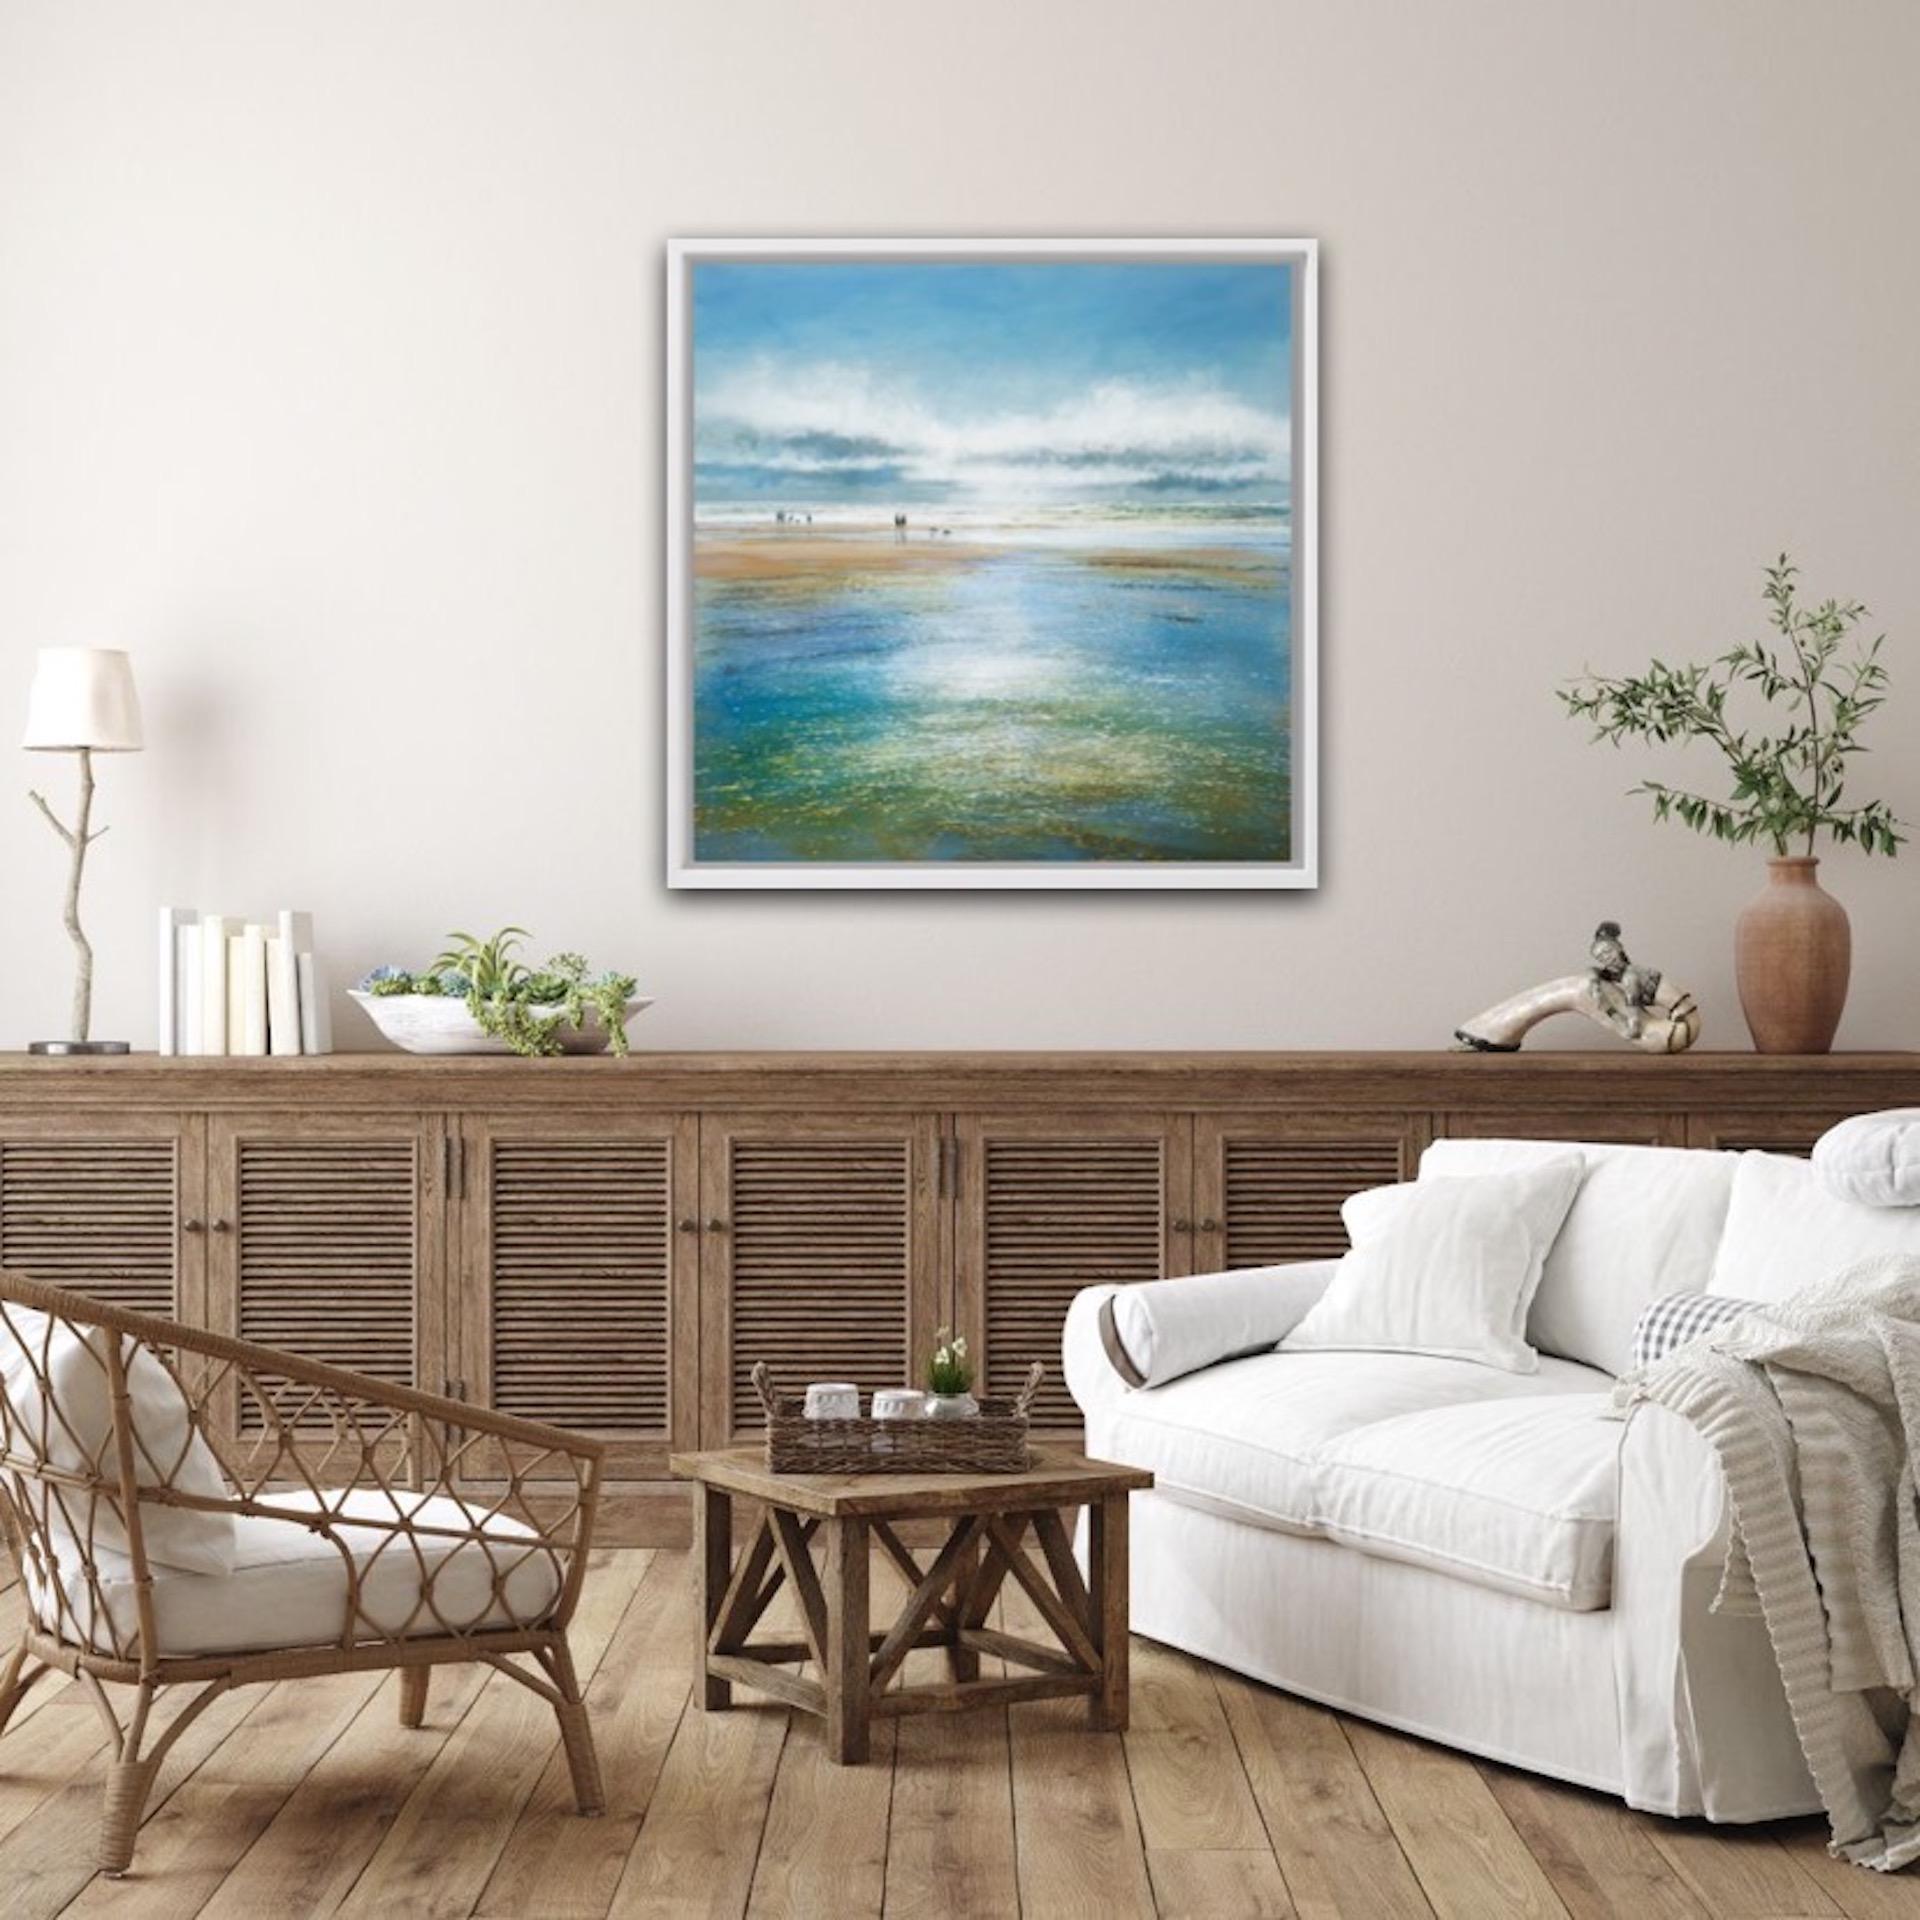 A Bright Day - Large Canvas Print, ocean scene, uk, sunrise, blue, seascape art  - Painting by Michael Sanders